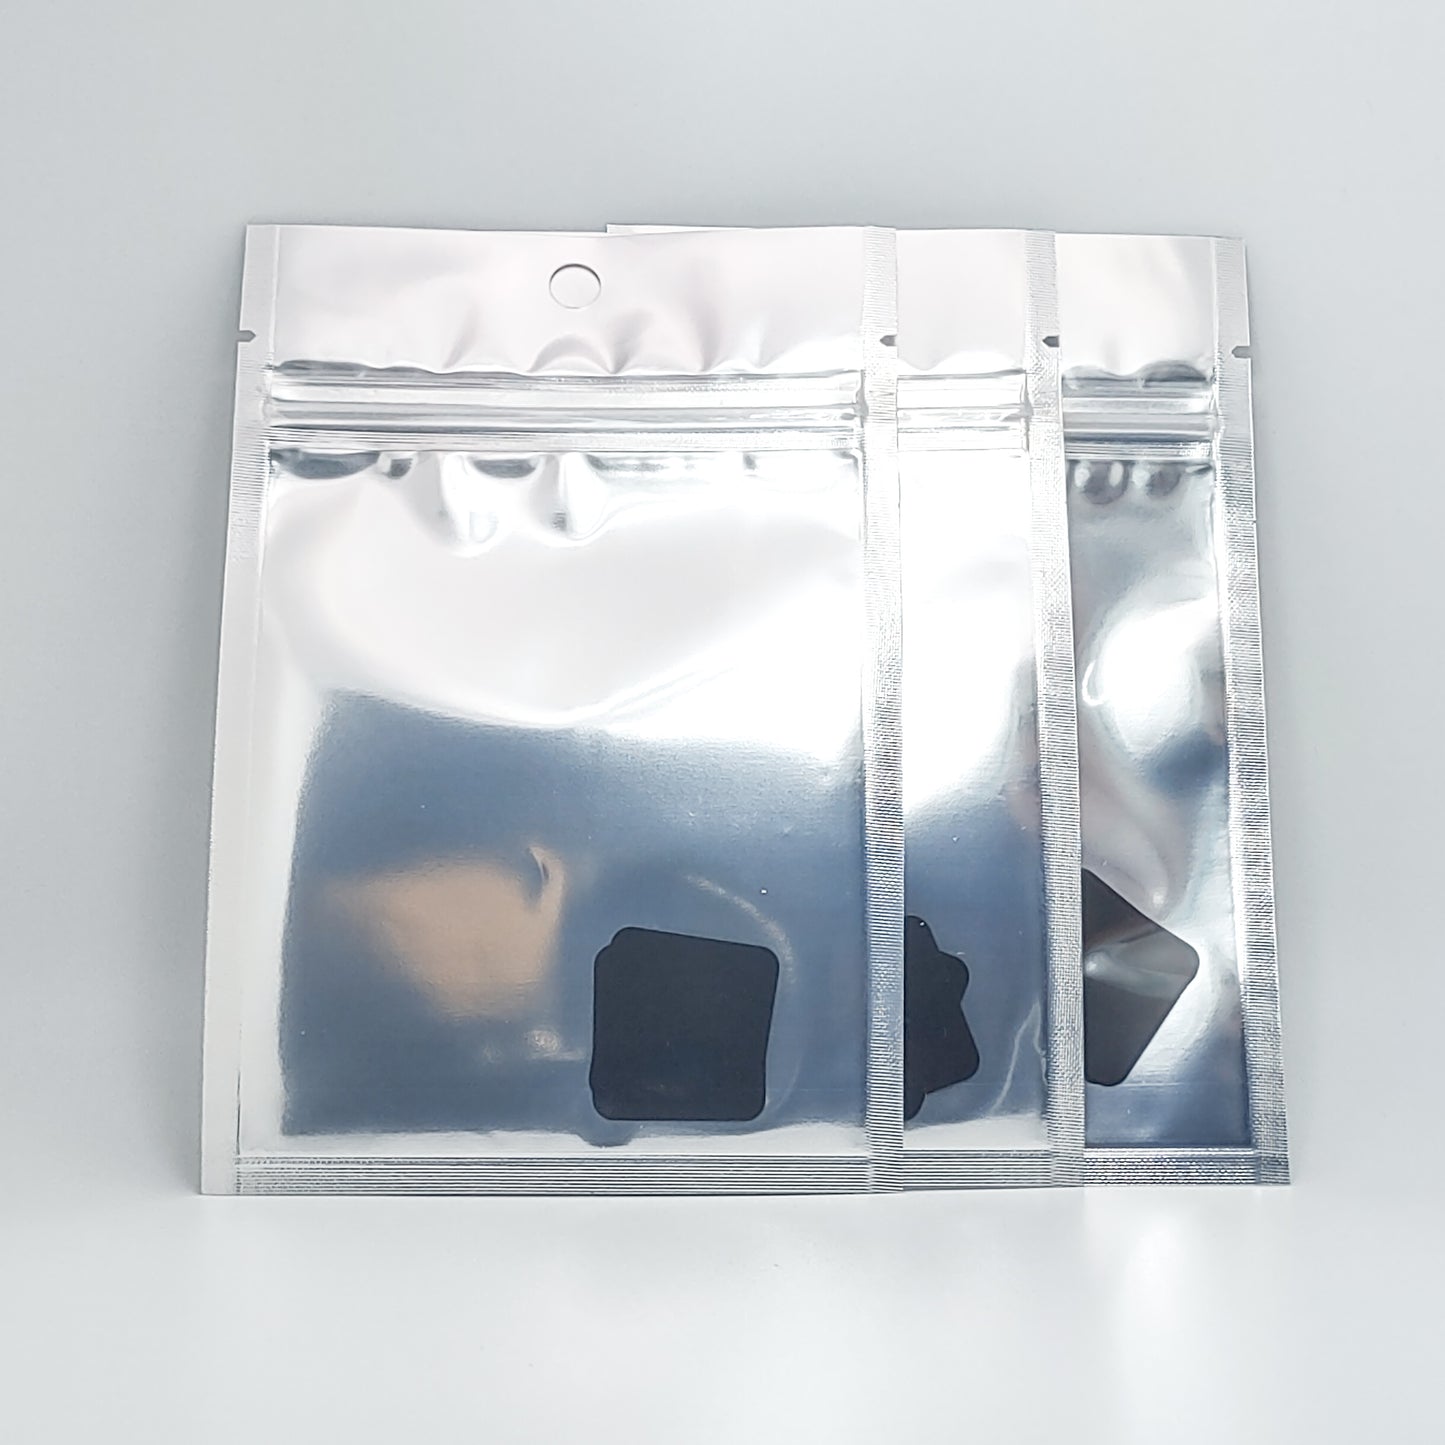 Anti-Tarnish Jewelry Storage Bags-3 Pack – Jewel Brite